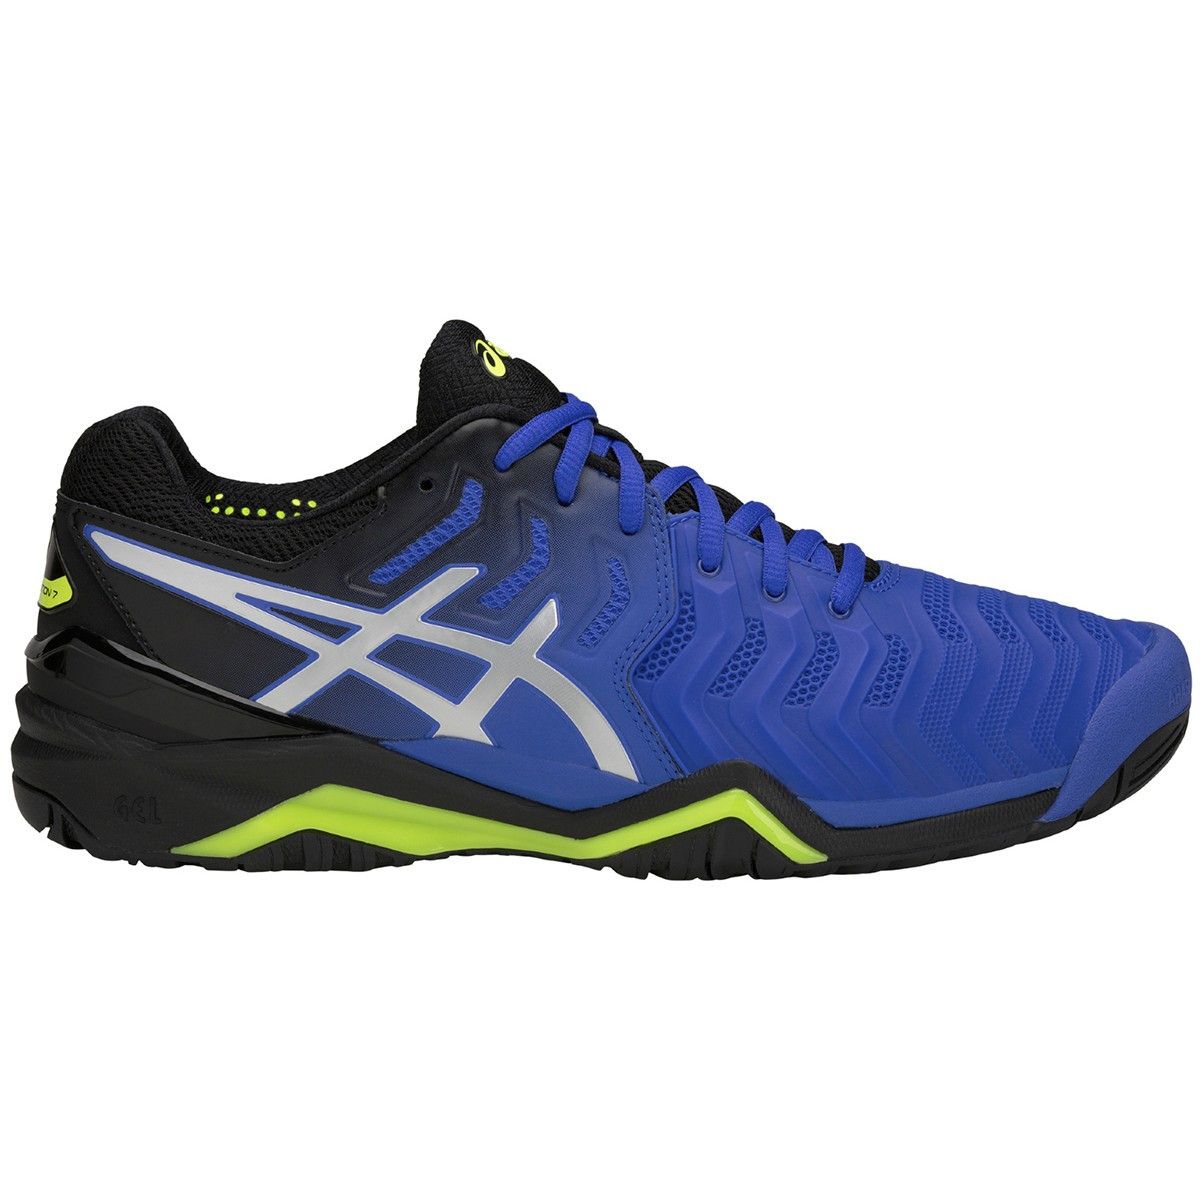 Asics Gel Resolution 7 Men's Tennis Shoes E701Y-407